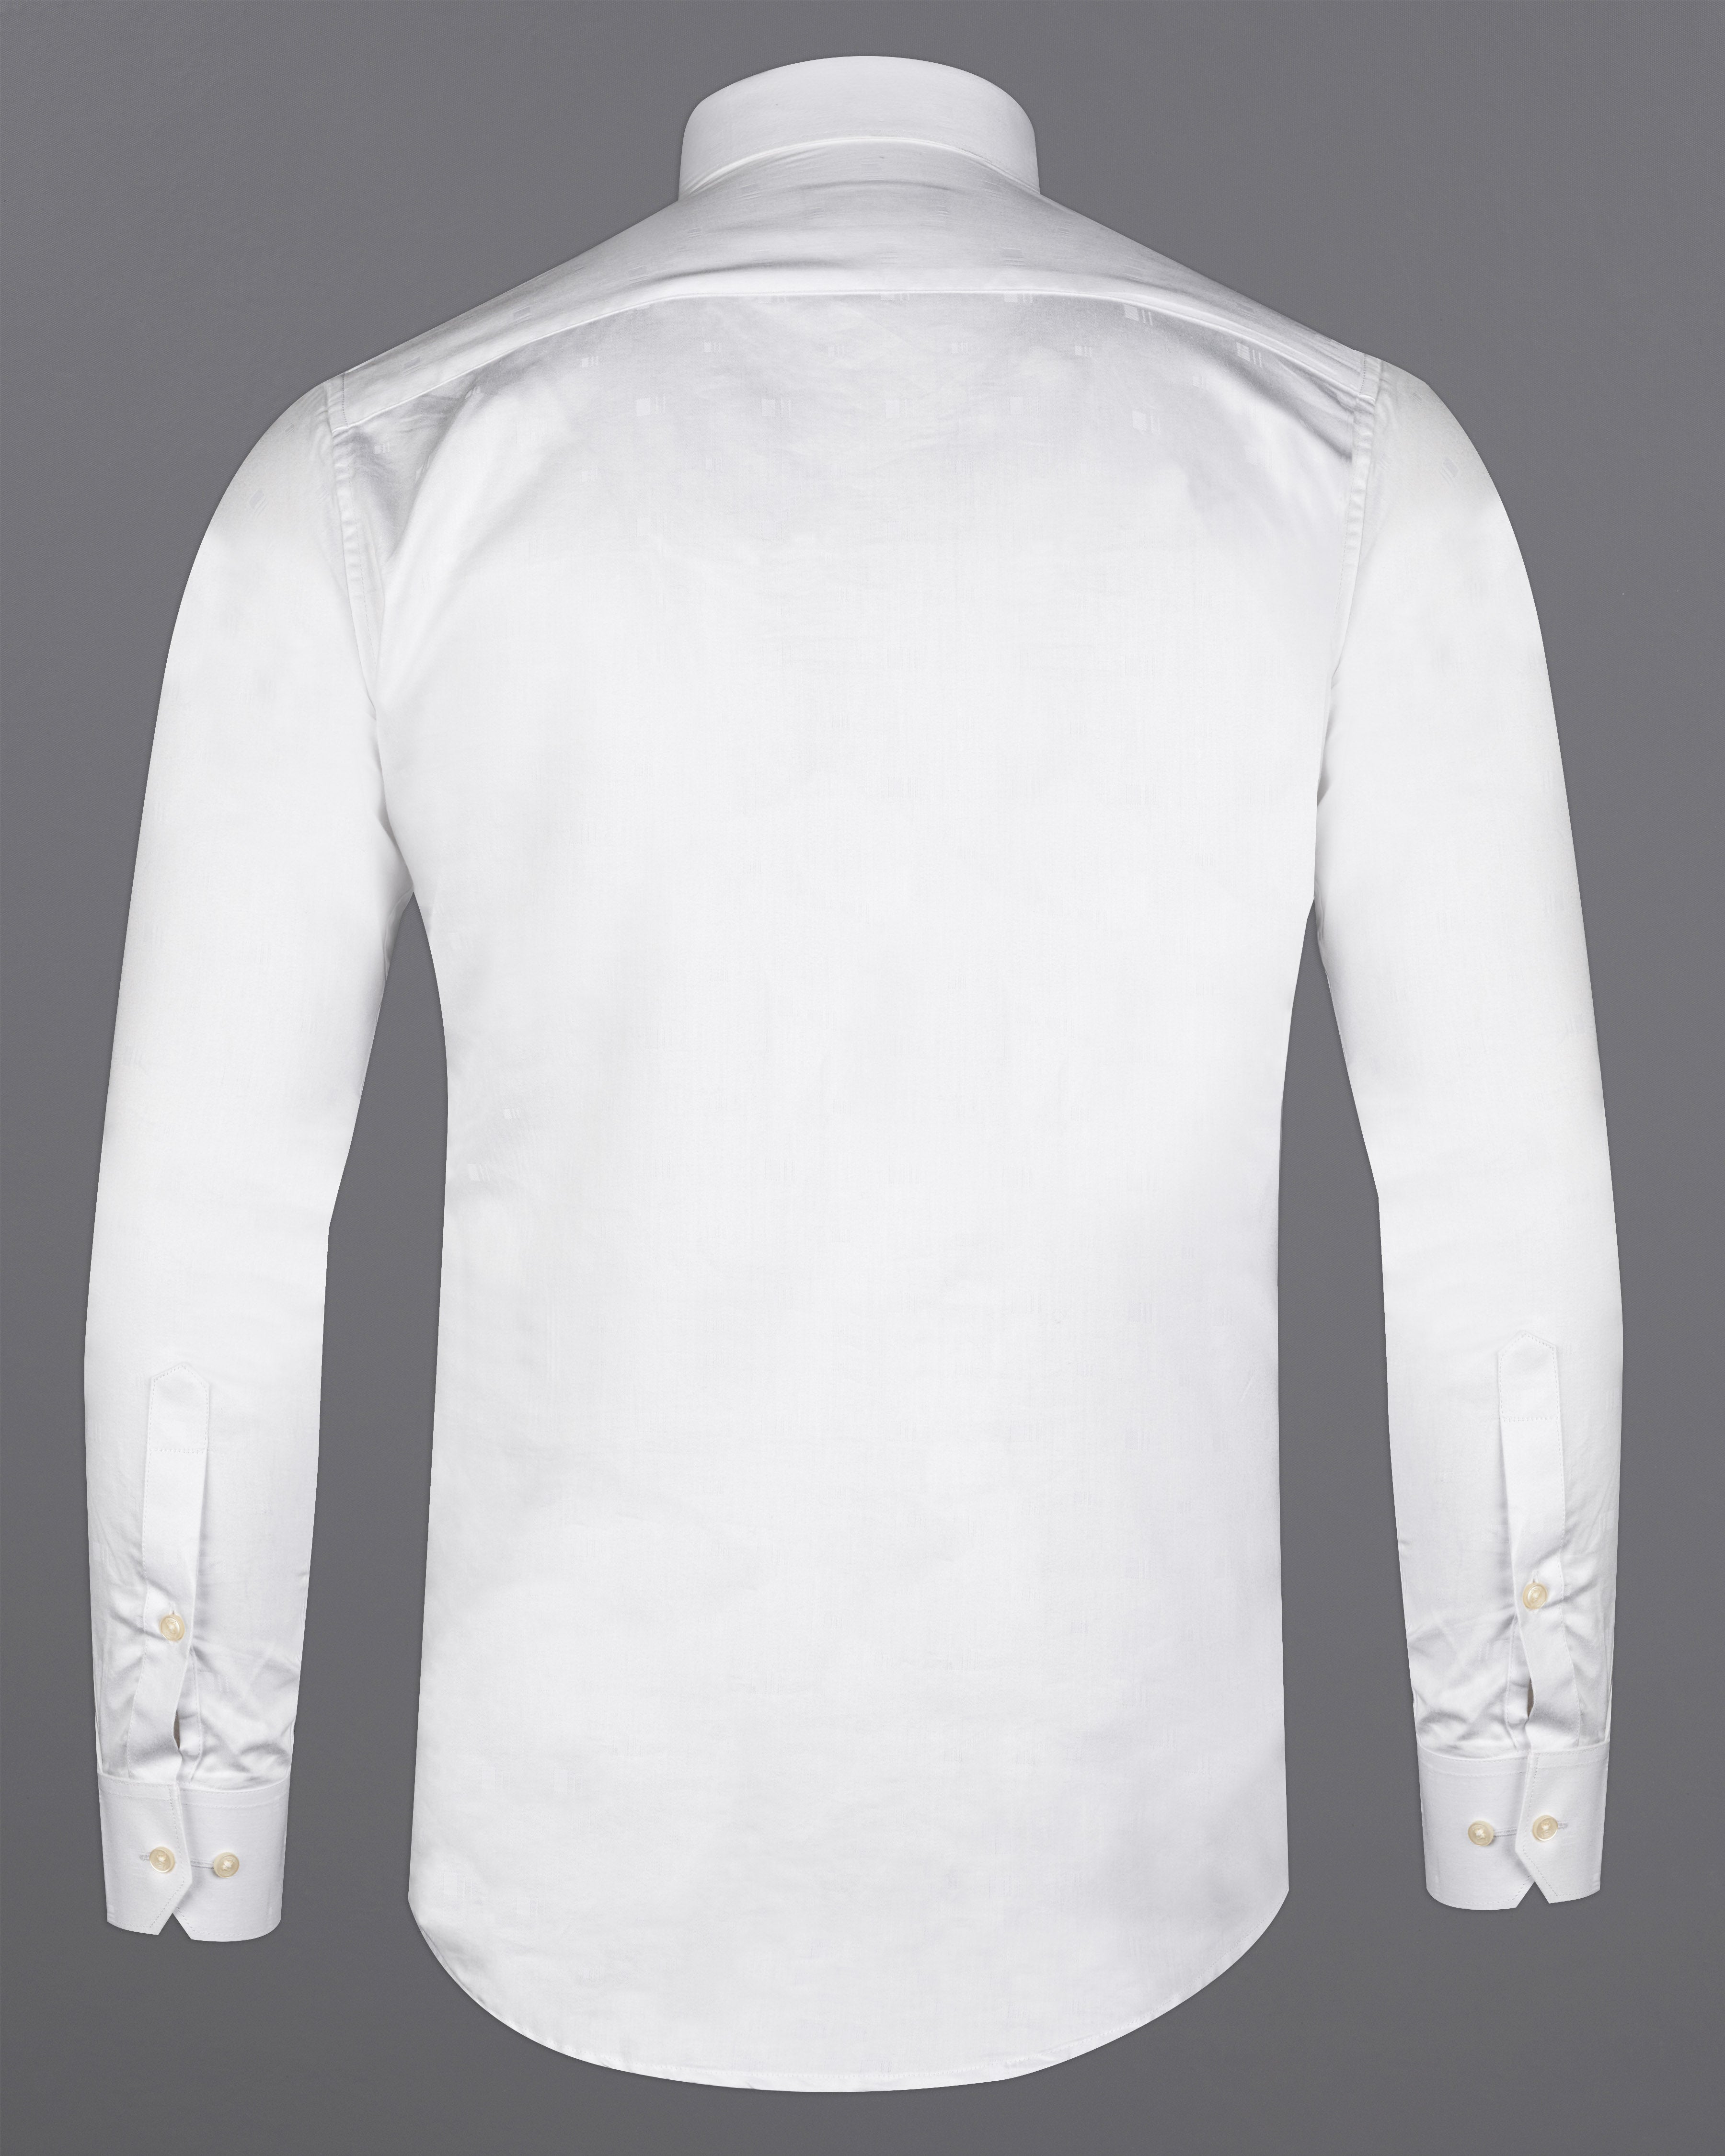 Bright White Jacquard Textured Premium Giza Cotton Shirt 10003-38, 10003-H-38, 10003-39, 10003-H-39, 10003-40, 10003-H-40, 10003-42, 10003-H-42, 10003-44, 10003-H-44, 10003-46, 10003-H-46, 10003-48, 10003-H-48, 10003-50, 10003-H-50, 10003-52, 10003-H-52